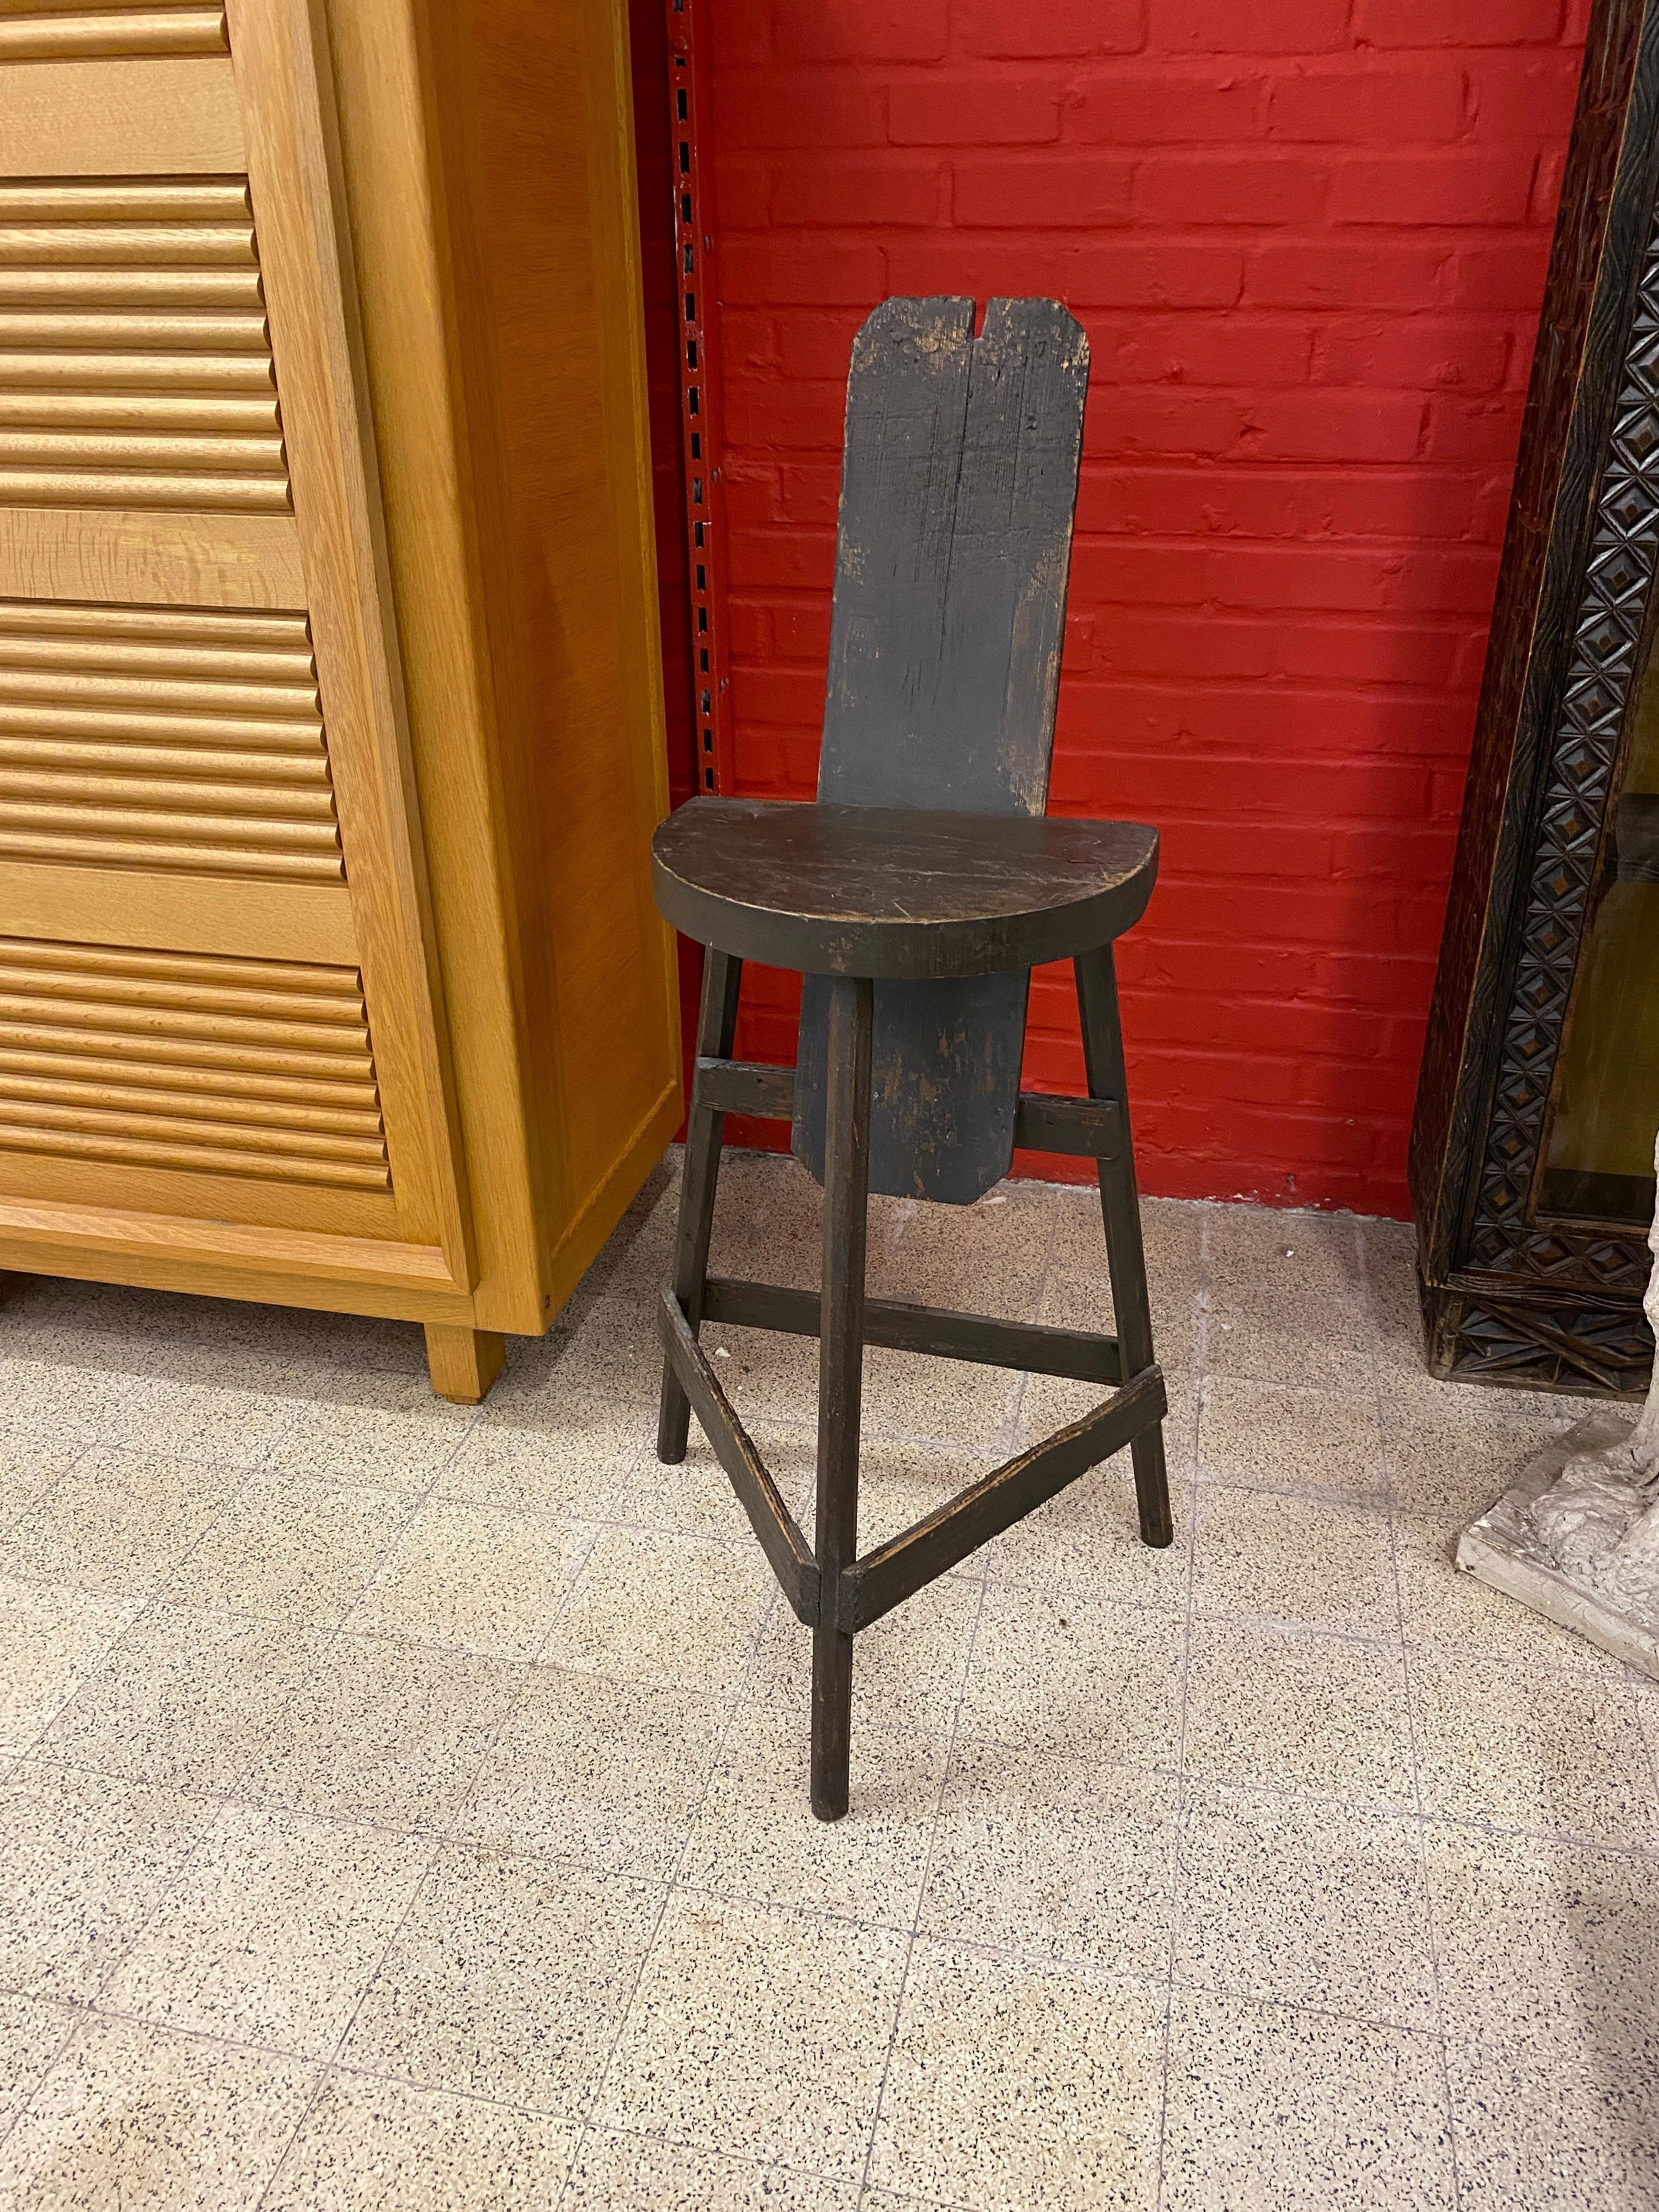 Brutalist pine stool, circa 1950.
HS 80